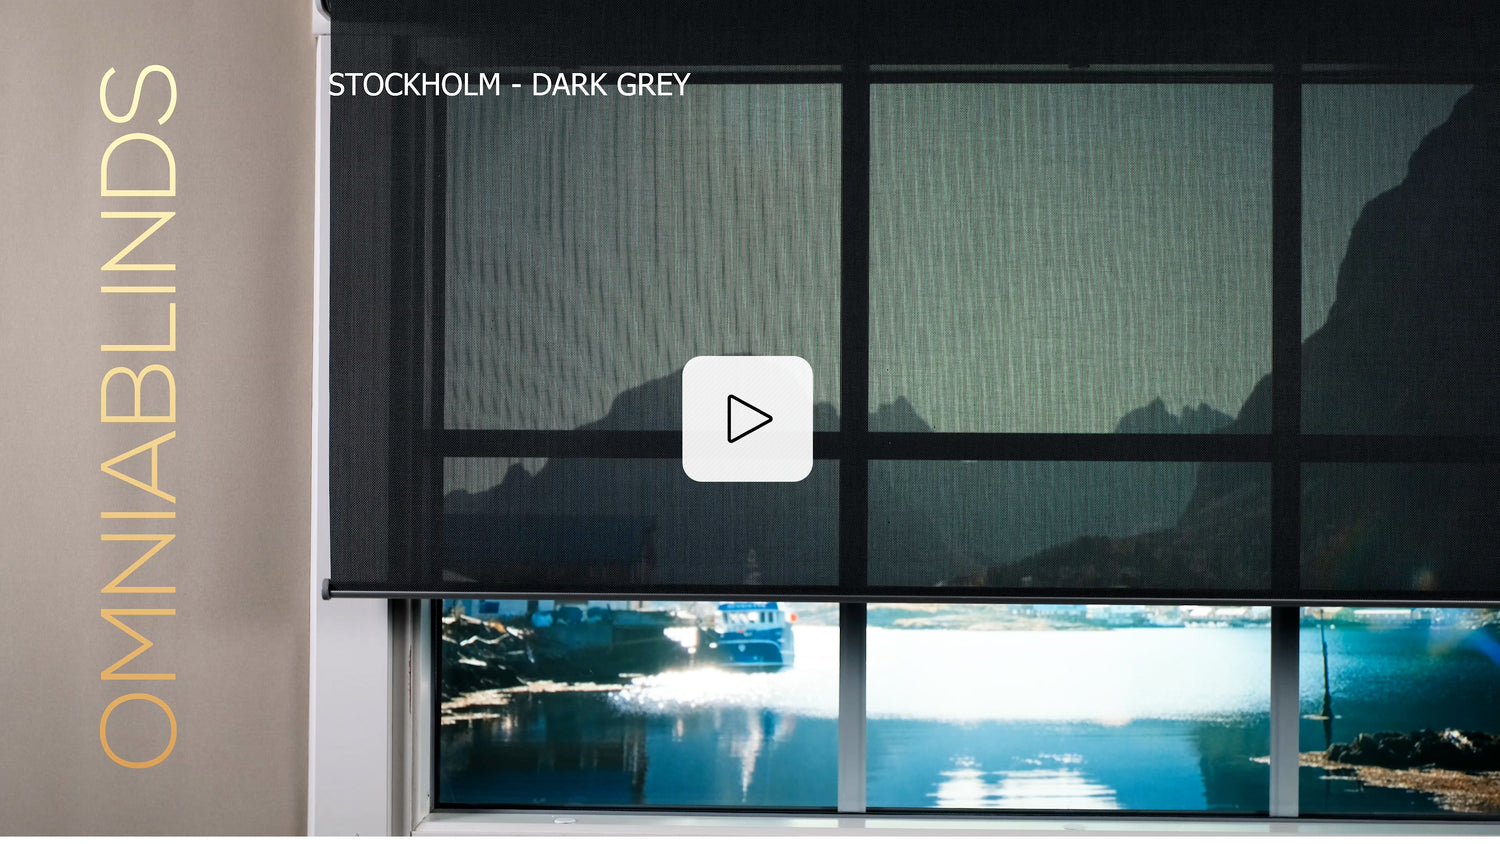 Stockholm - Dark Grey